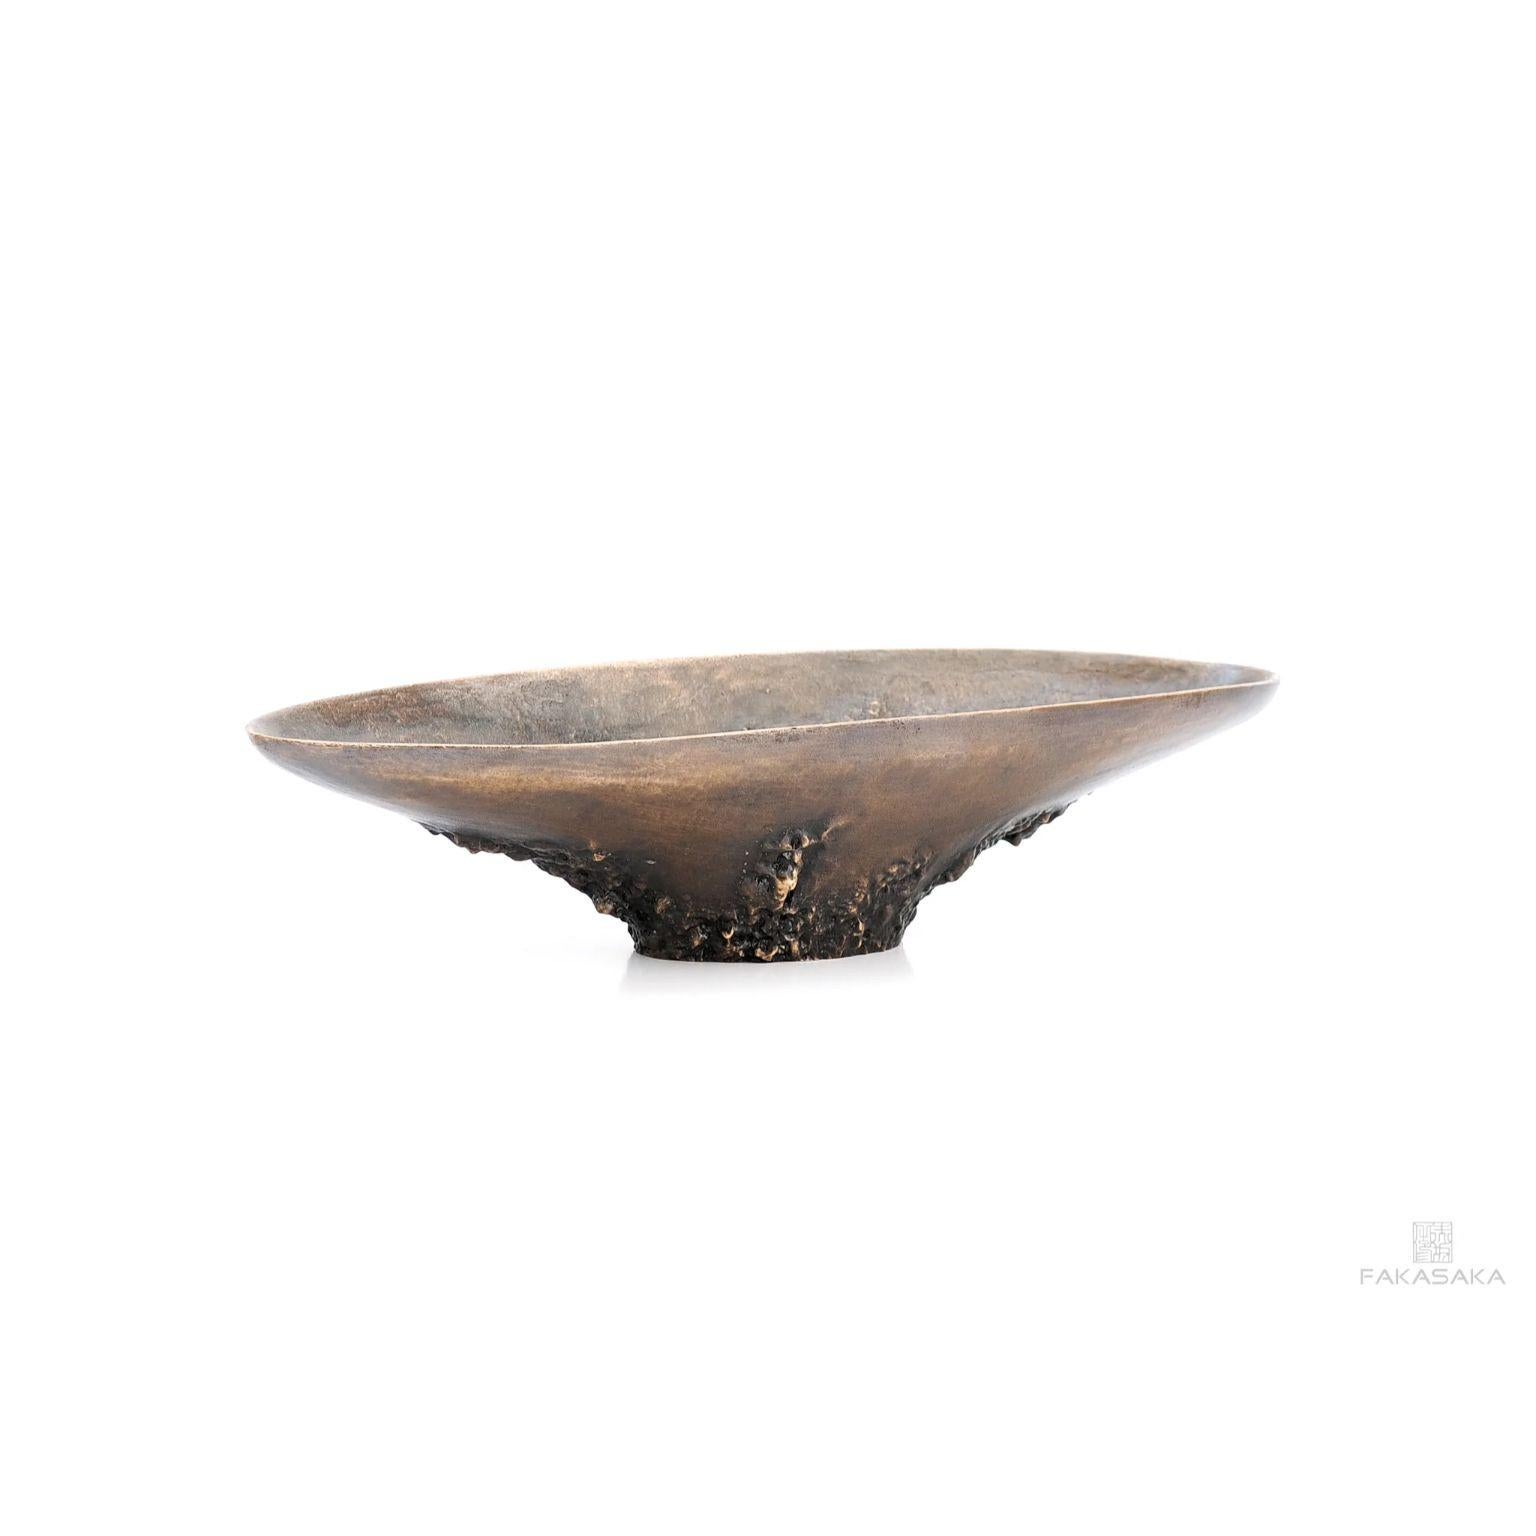 Modern O'Connor Bowl by Fakasaka Design For Sale